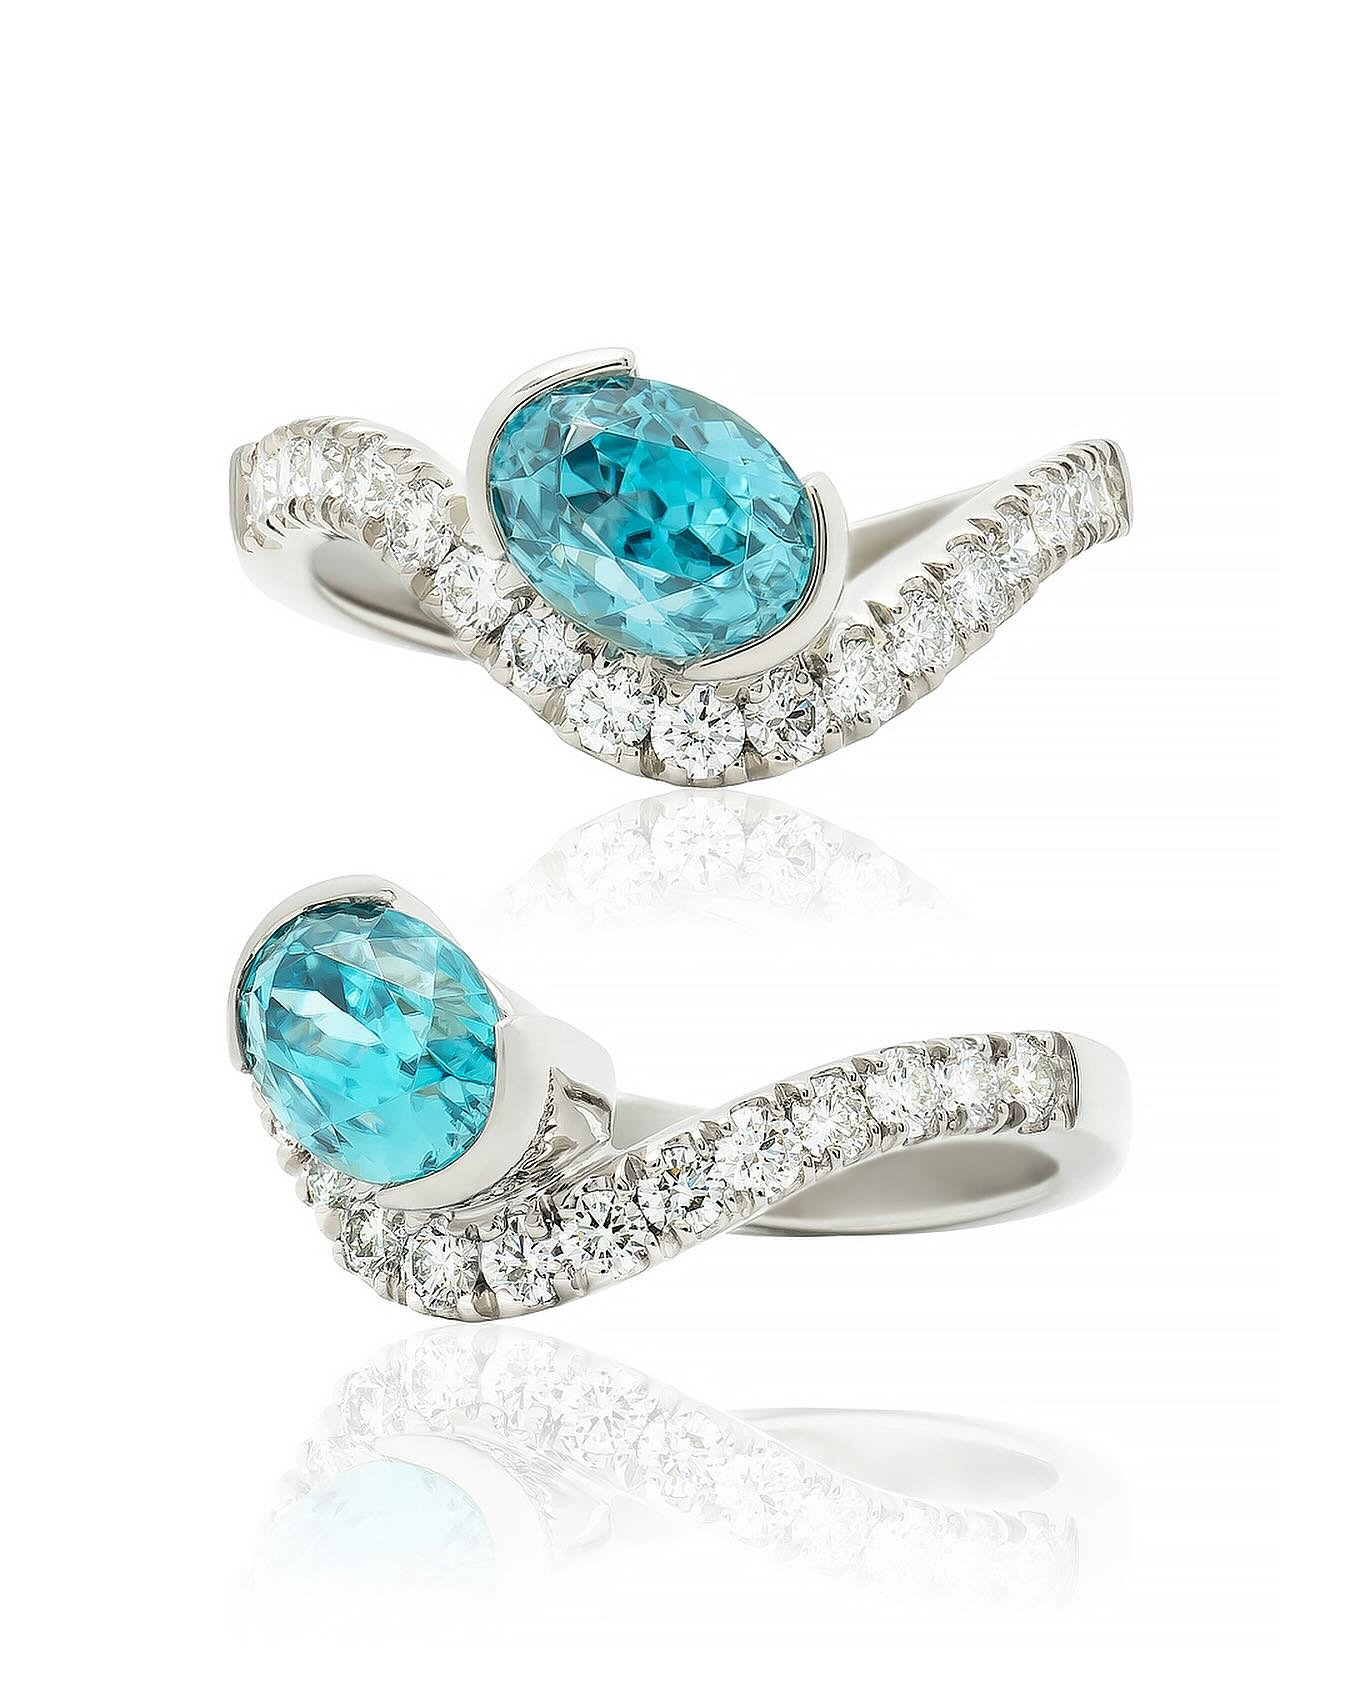 Zircon &amp; Diamond Ring

Blue Zircon : 2.2ct
Diamonds : .54ctw - VS1 - D/E
14kt White Gold
$5,000

Big Island Jewelers
Fine Jewelry - Made by Hand
#madeinhawaii